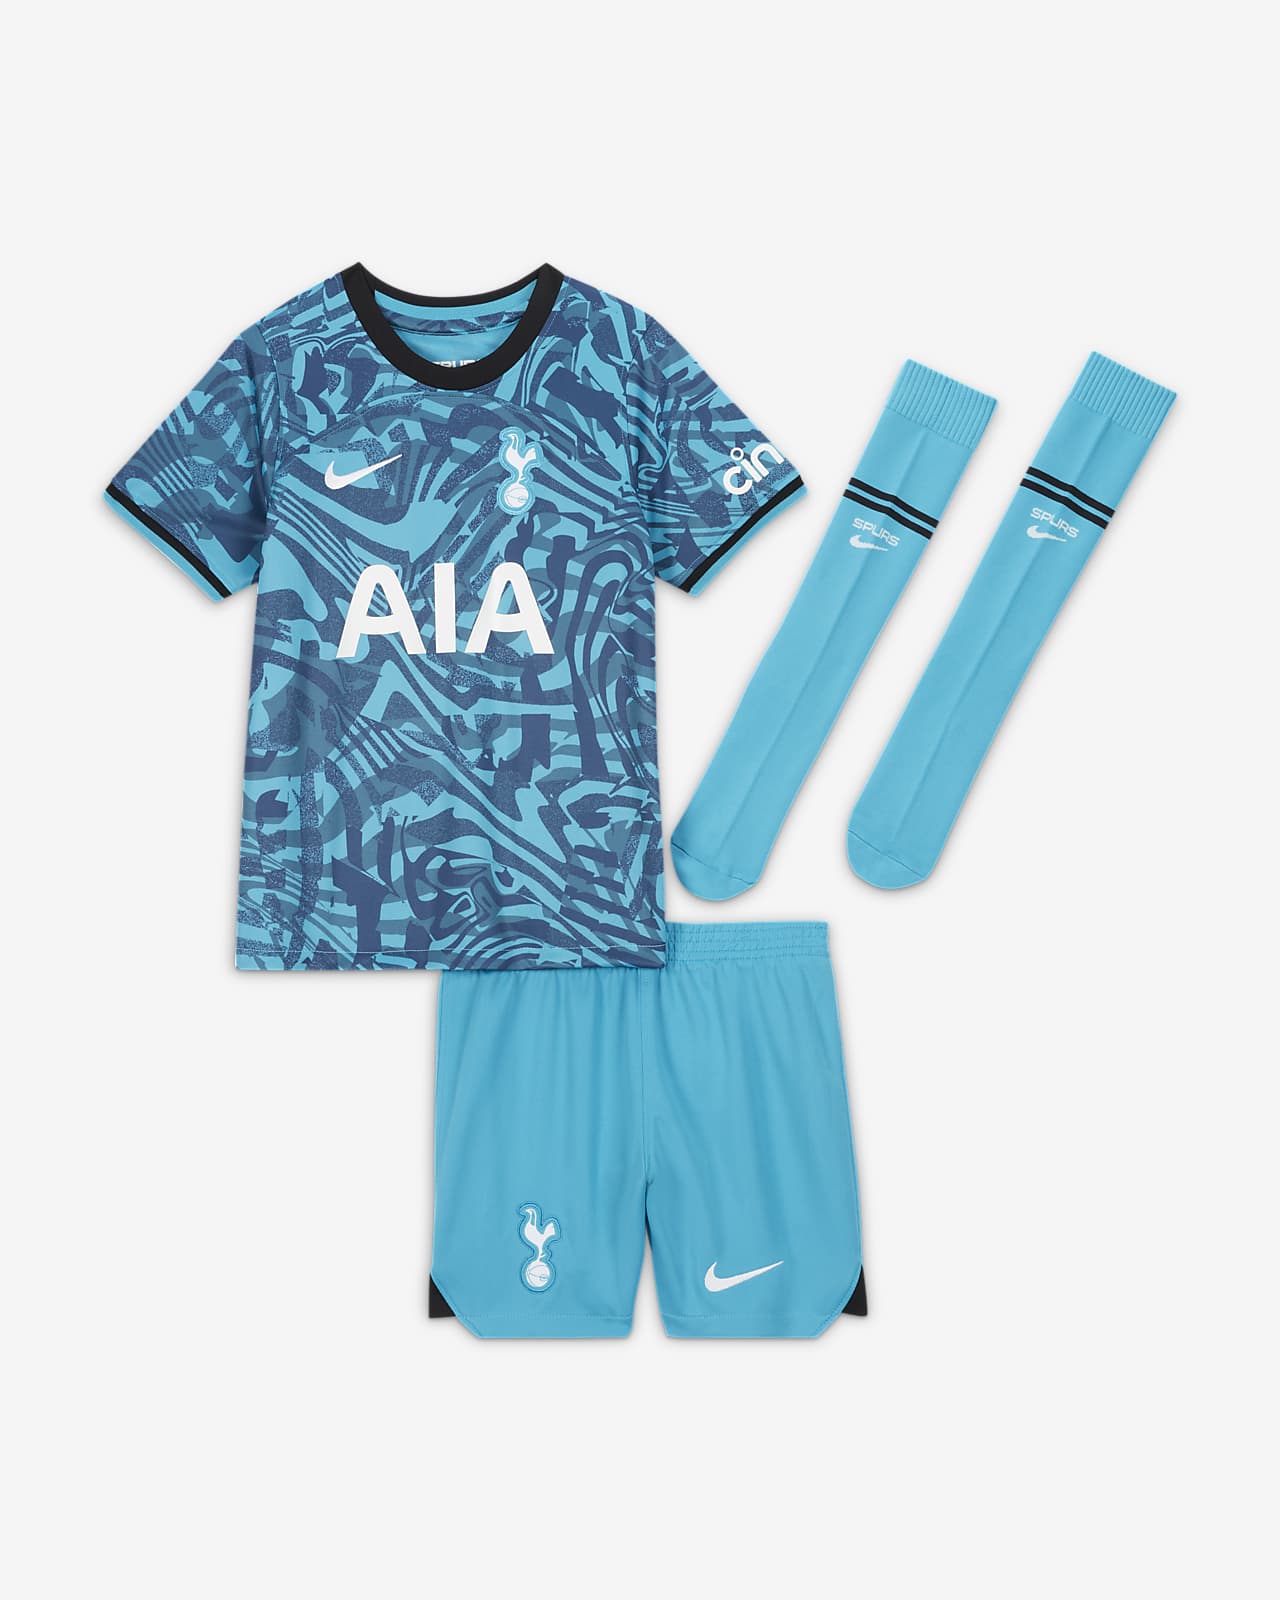 Tottenham Hotspur 2022/23 Third Younger Kids' Nike Football Kit